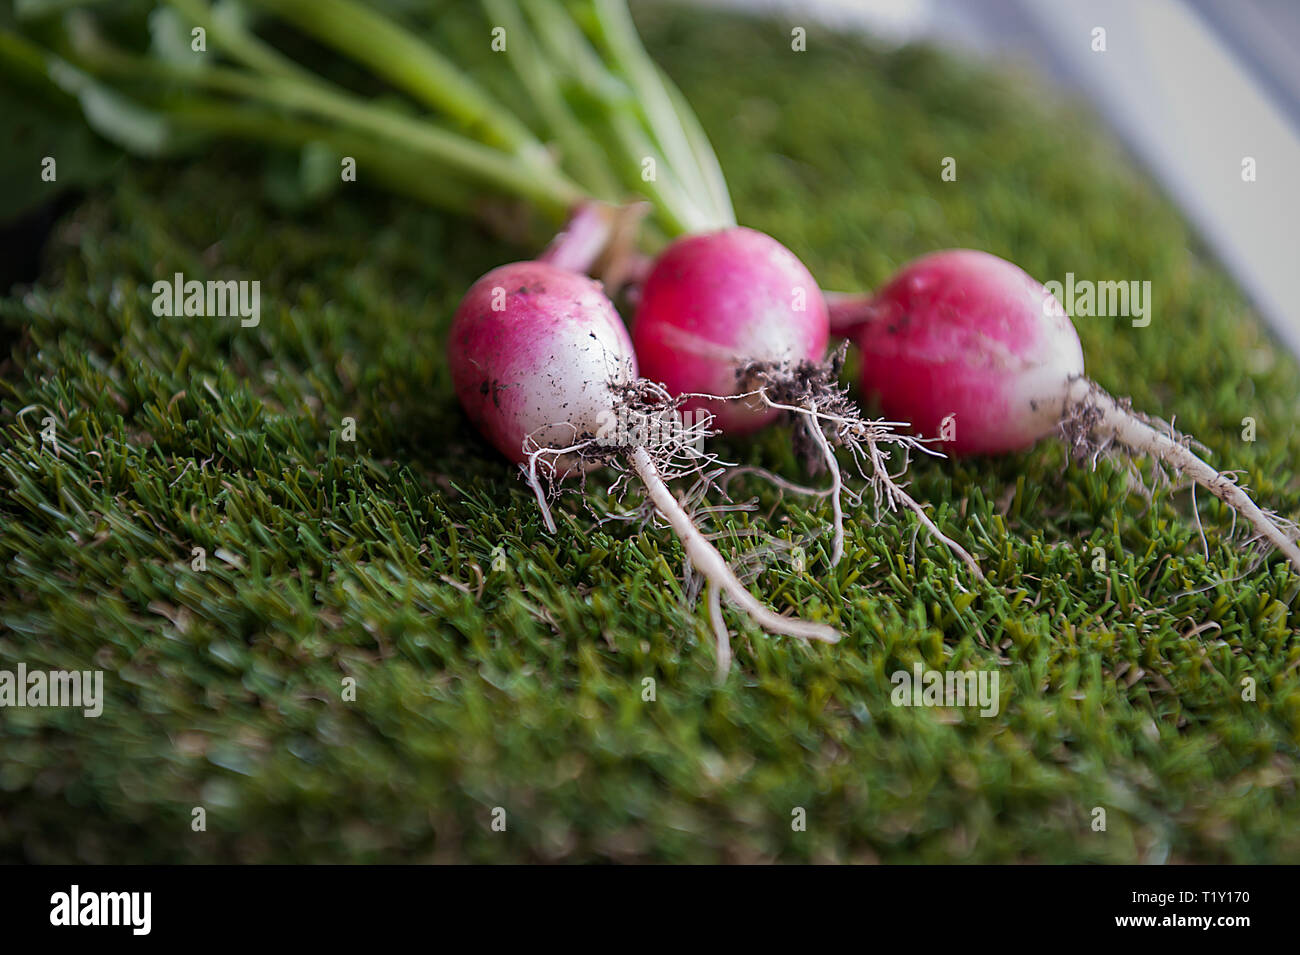 radish low glycemic index food Stock Photo